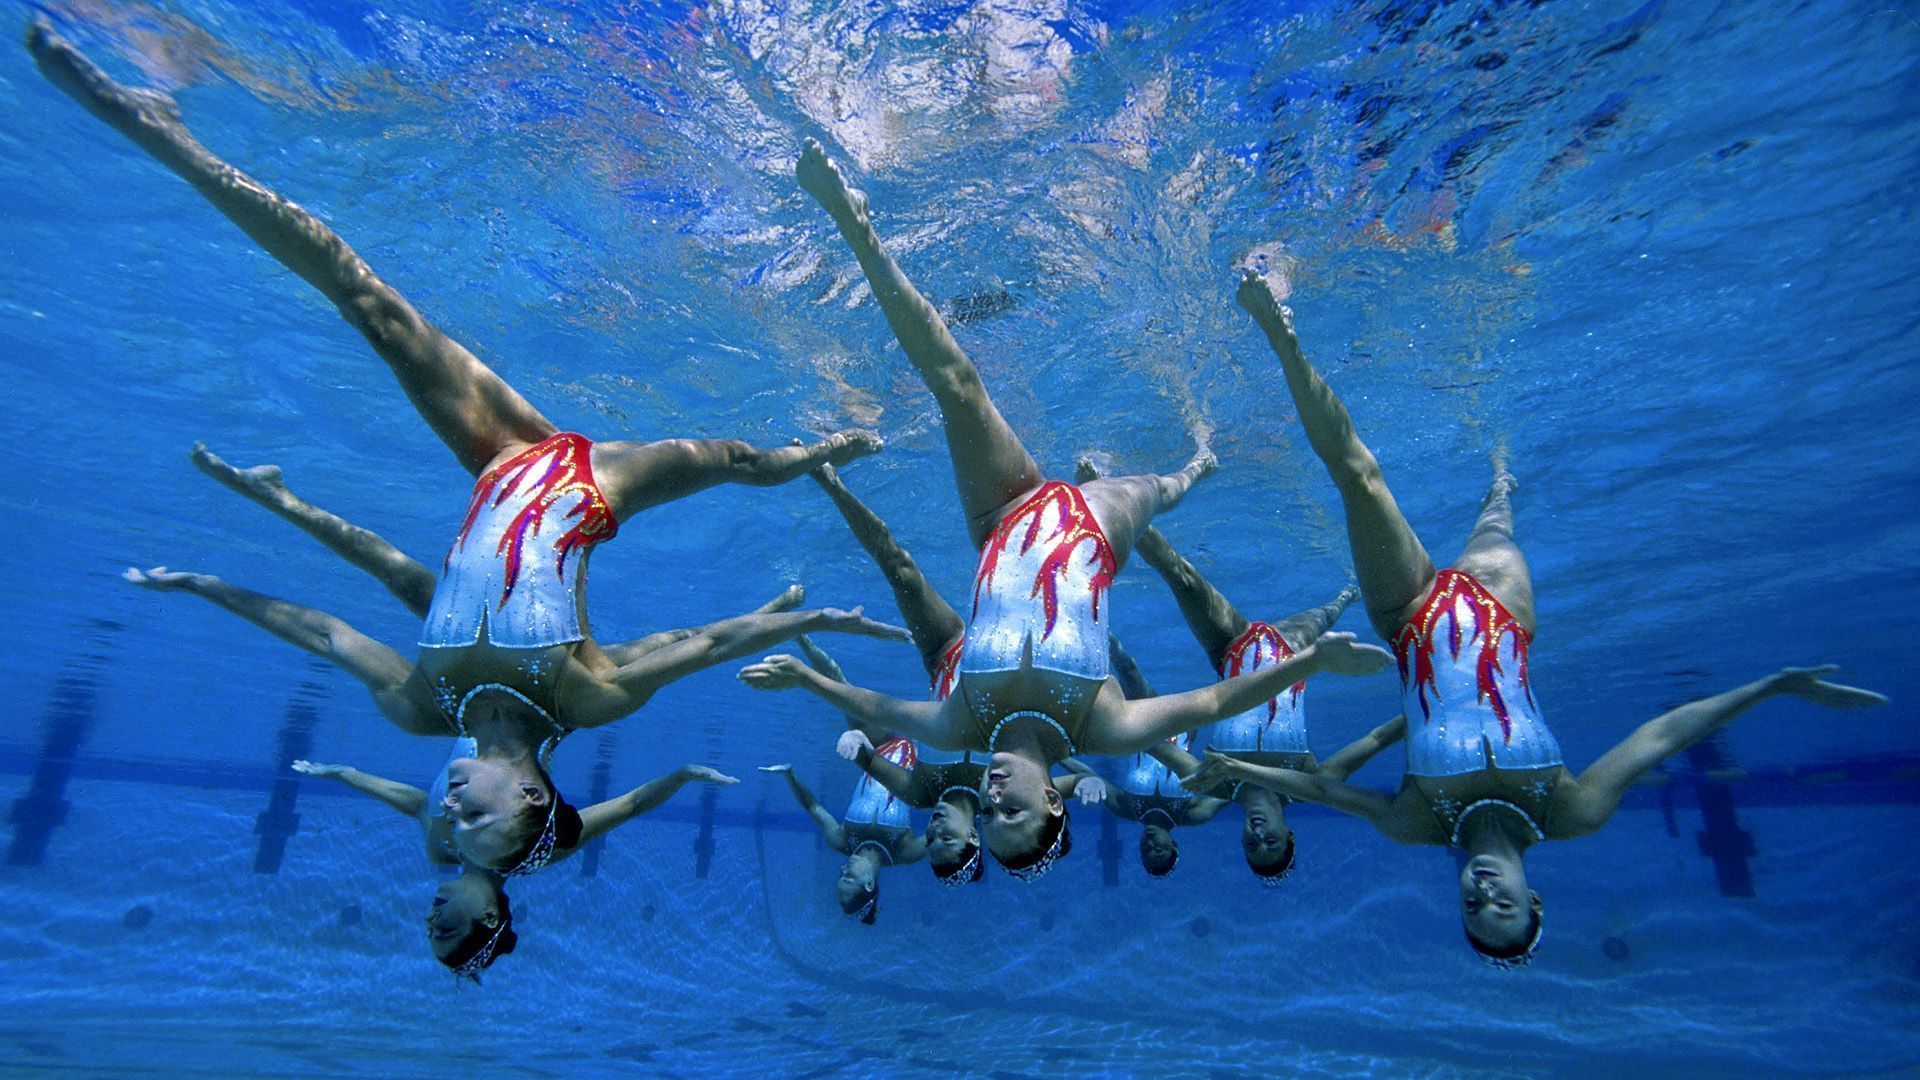 Swimming Sports Images | Download Free Desktop Wallpaper Images ...